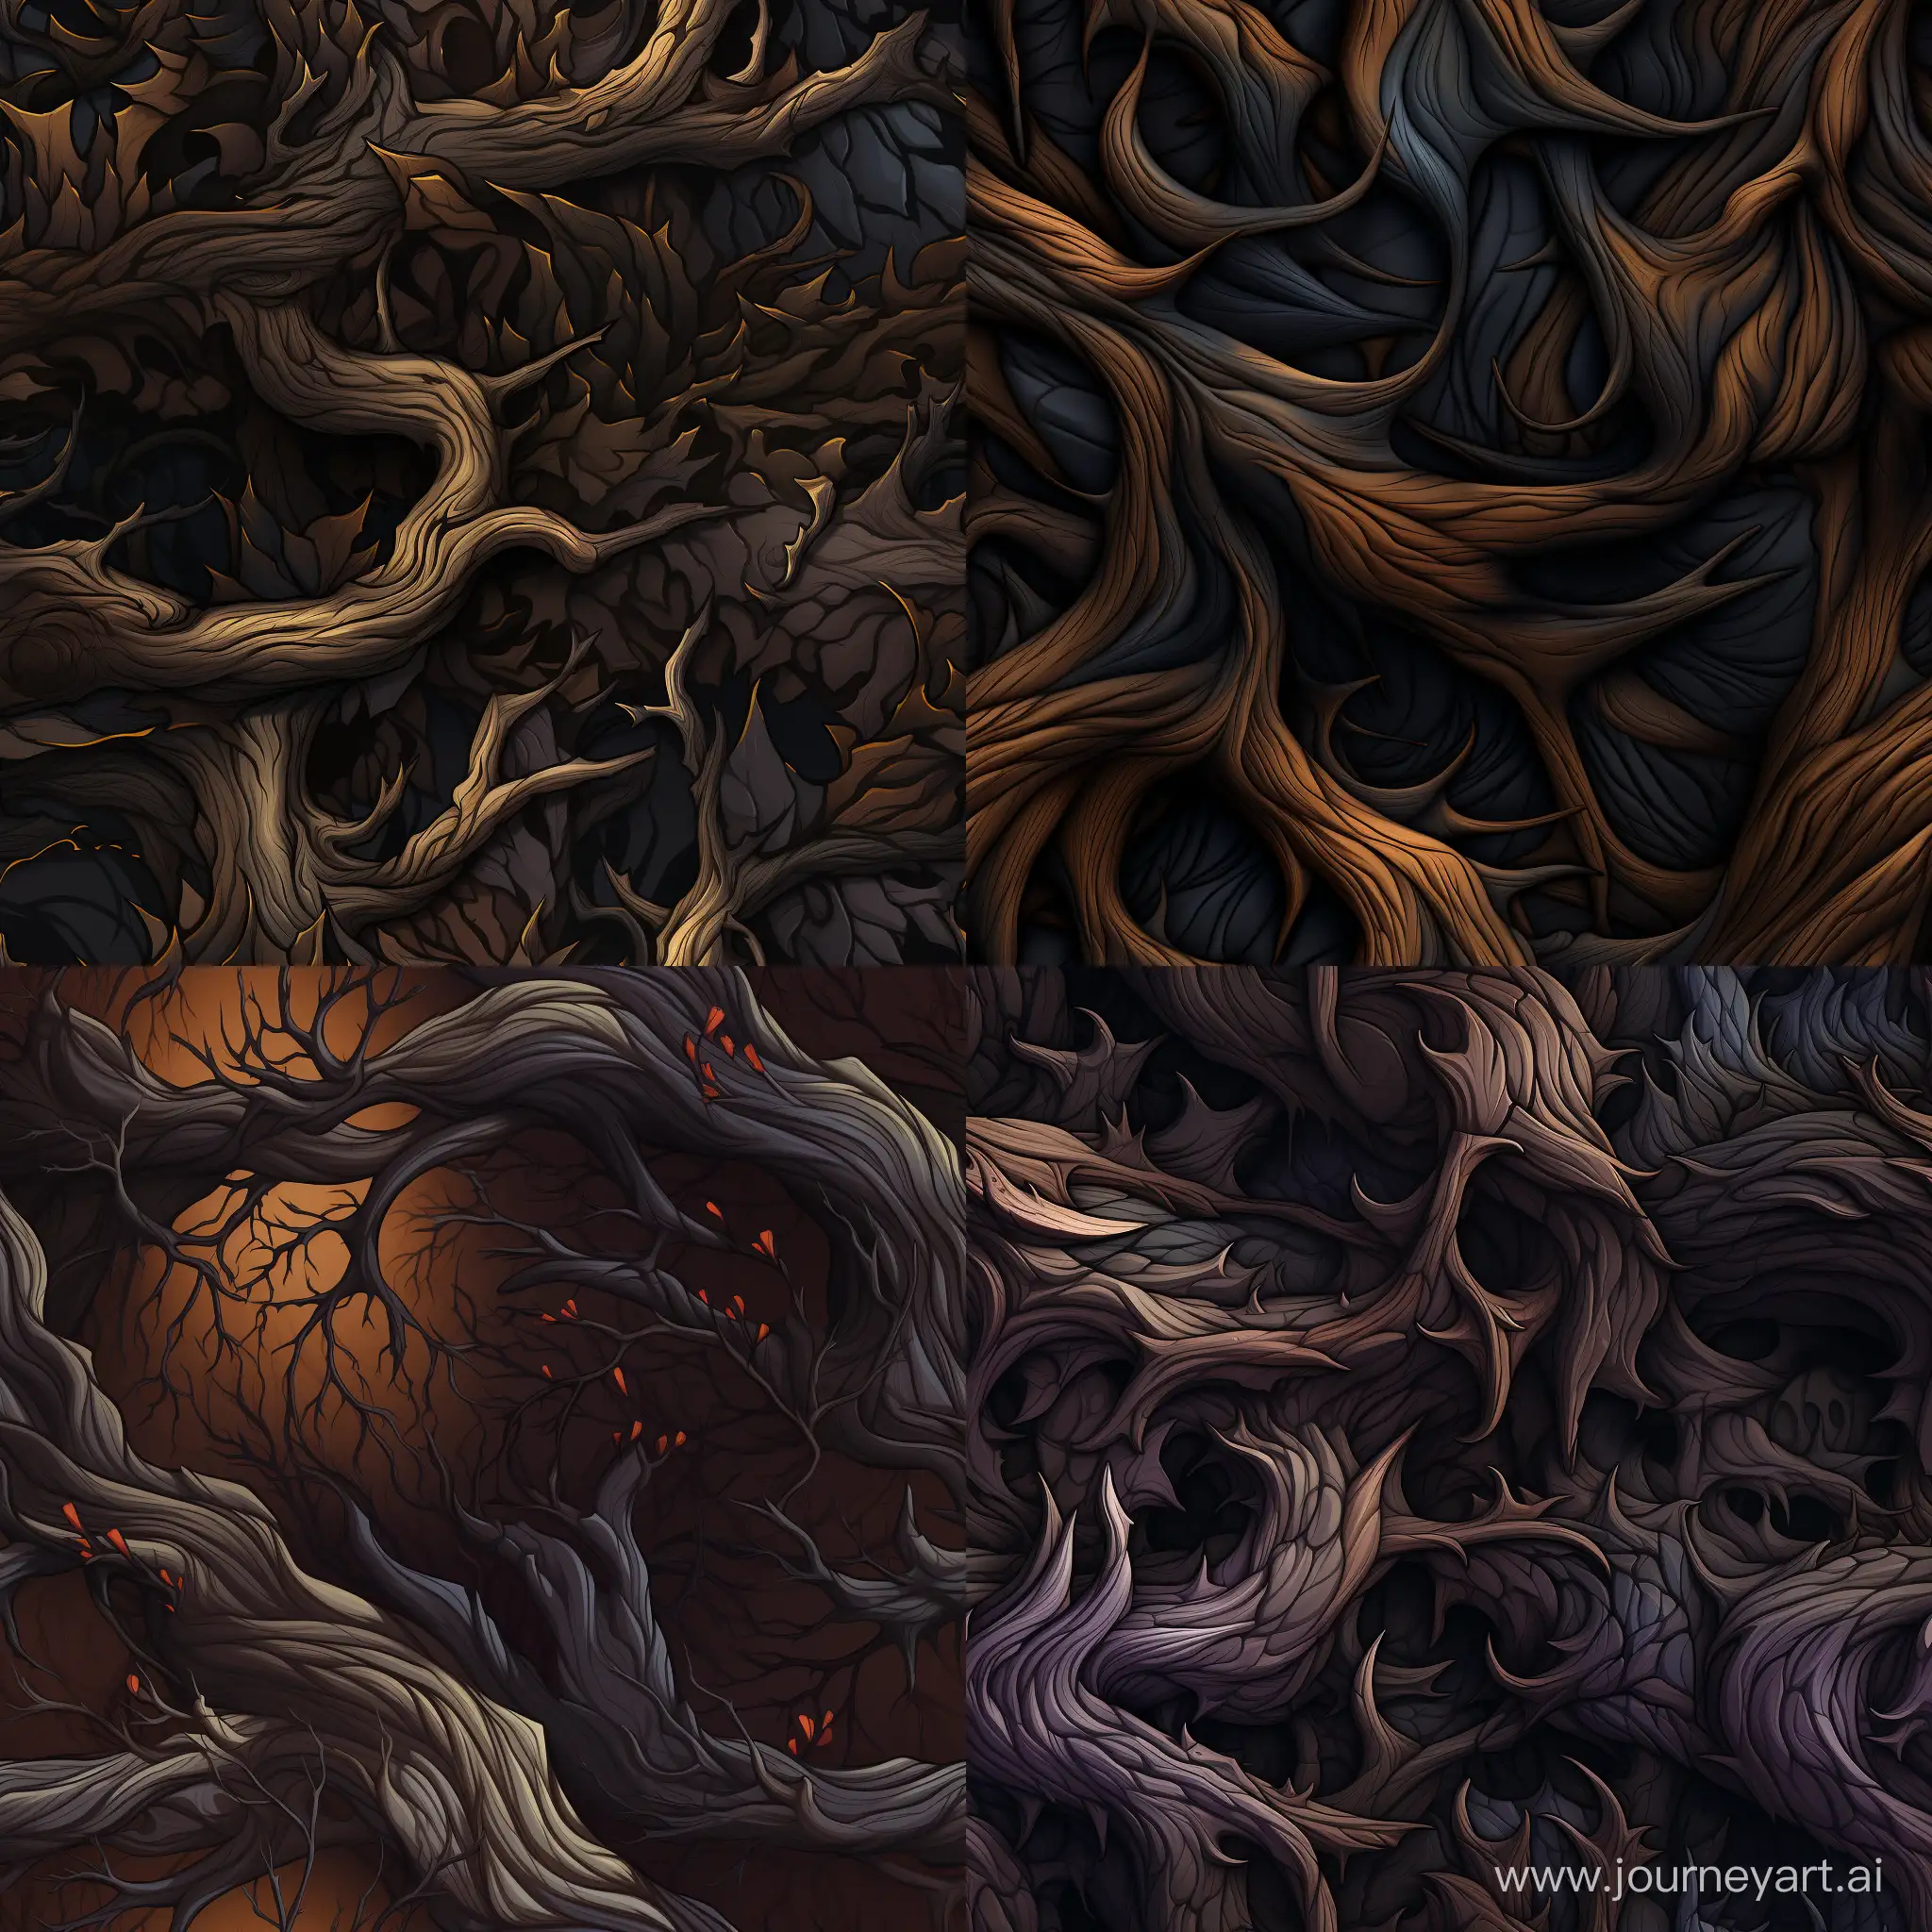 Ebony-Tree-Bark-Stylized-HighQuality-Texture-in-CellShaded-Art